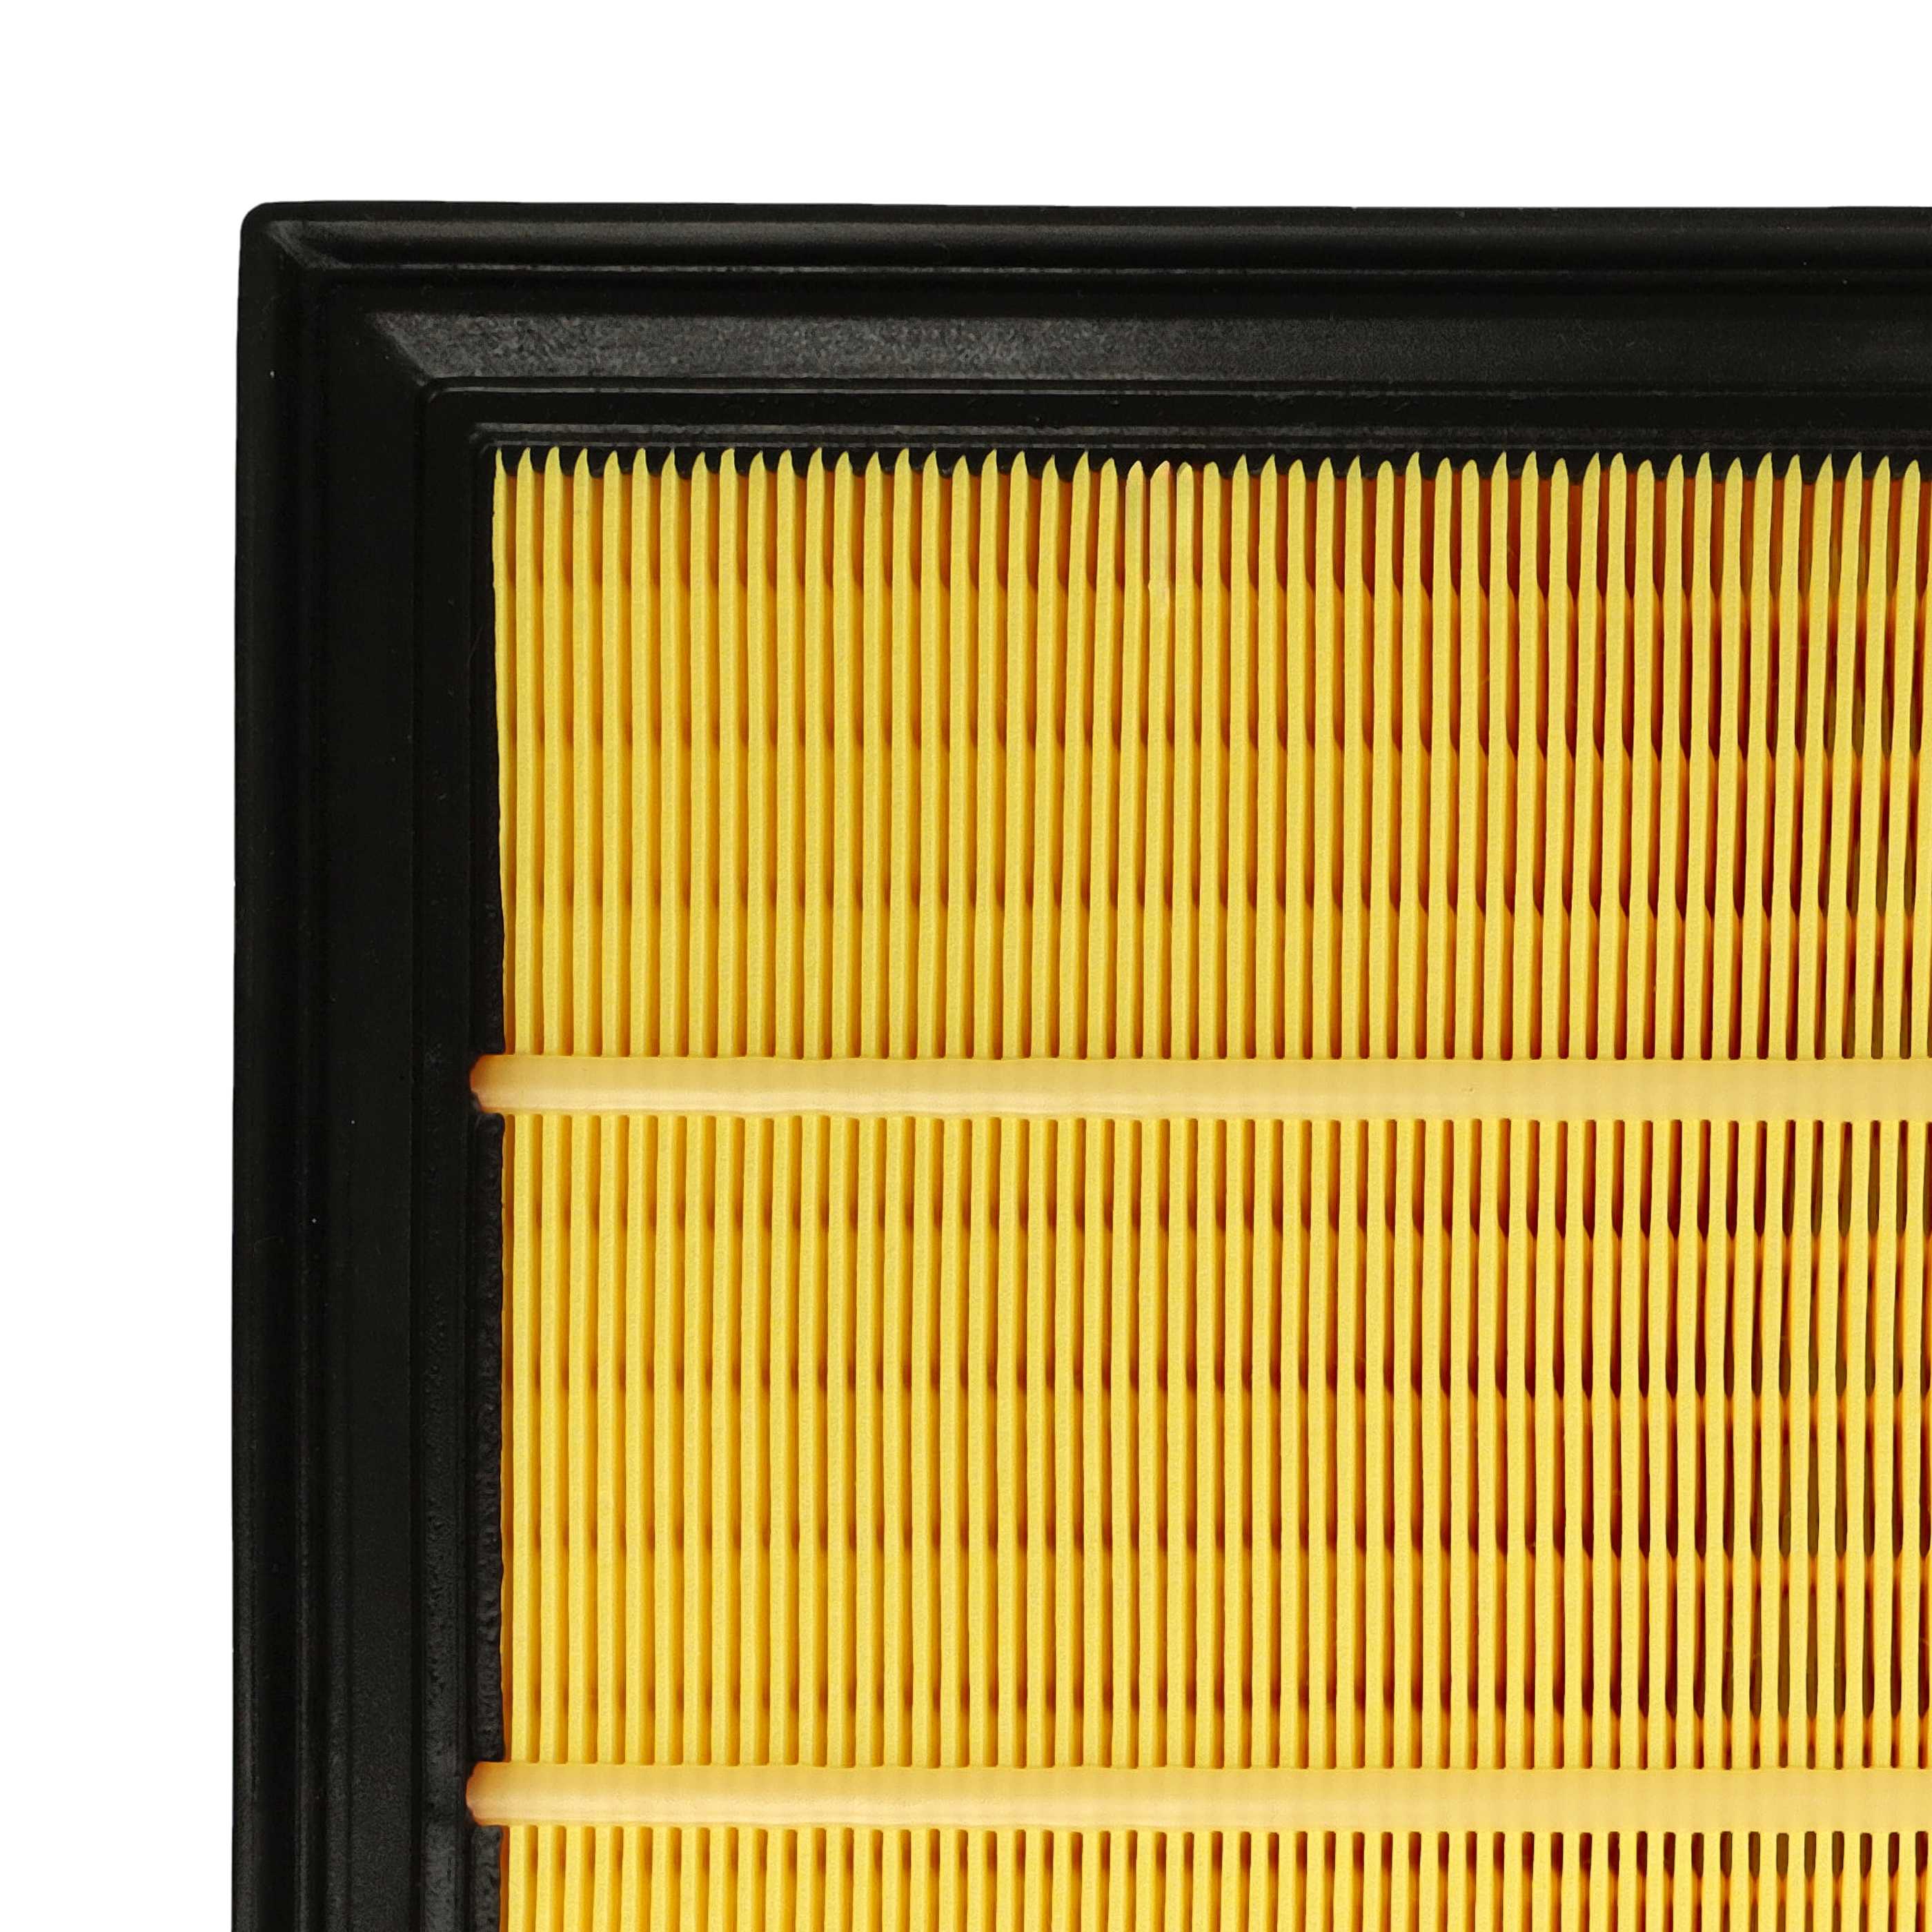 Filtro reemplaza 61605 para aspiradora filtro plisado plano